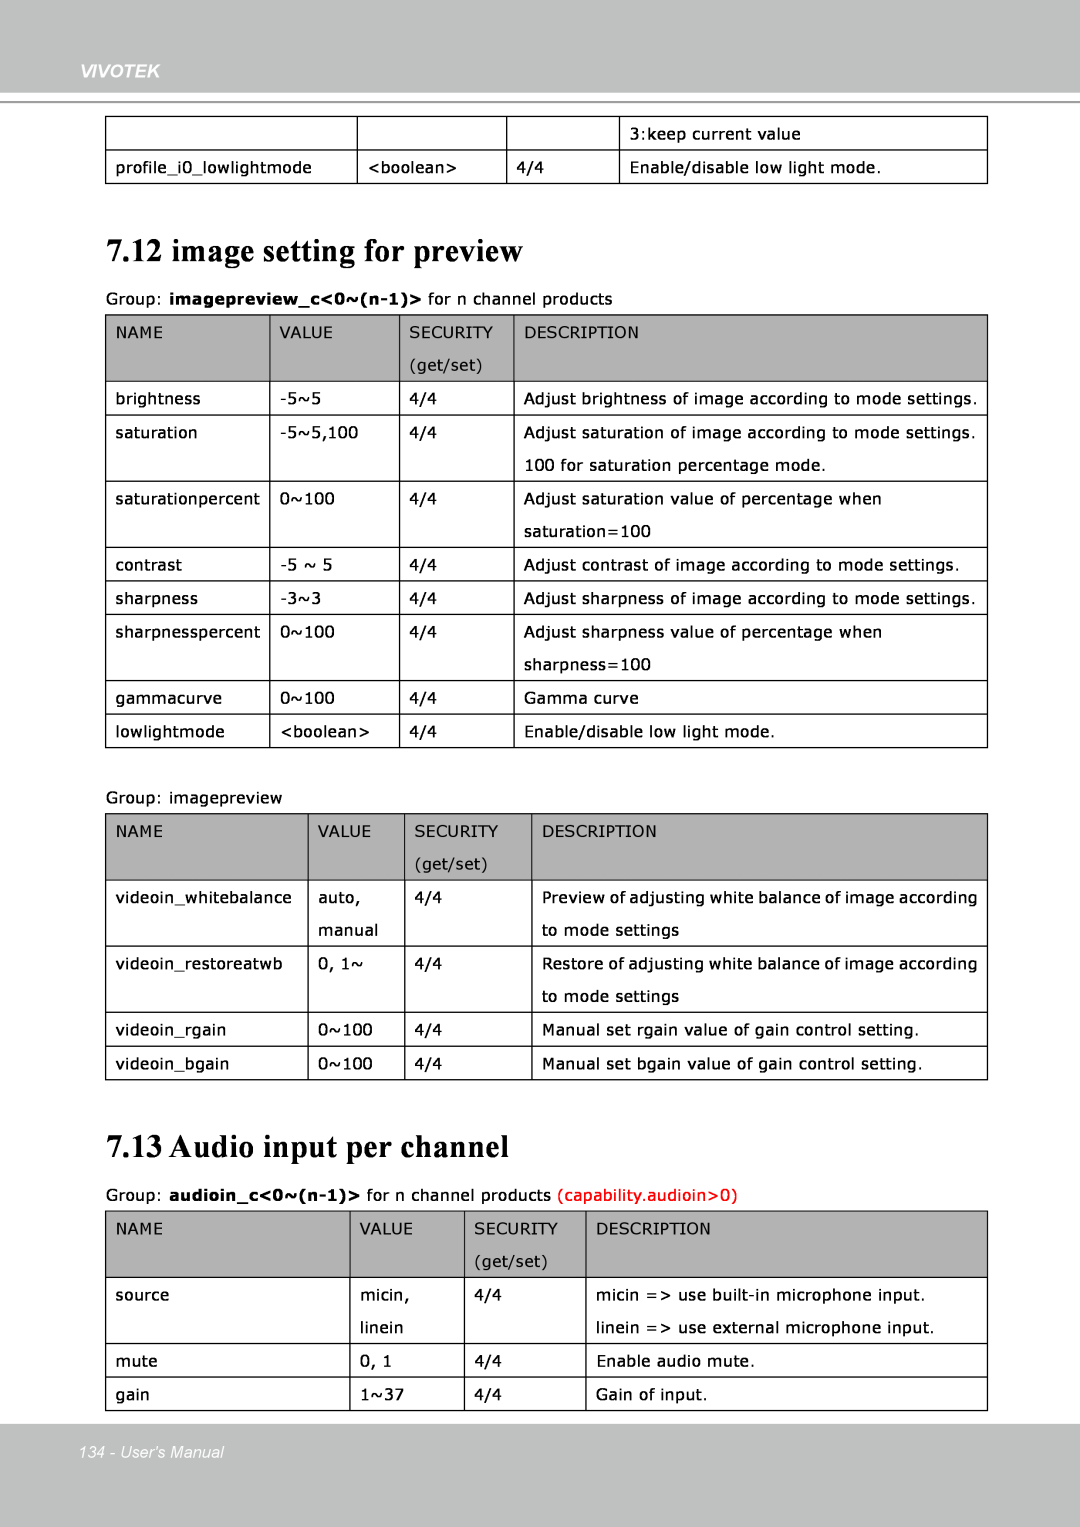 Vivotek IP8151 manual image setting for preview, Audio input per channel, Vivotek, Users Manual 